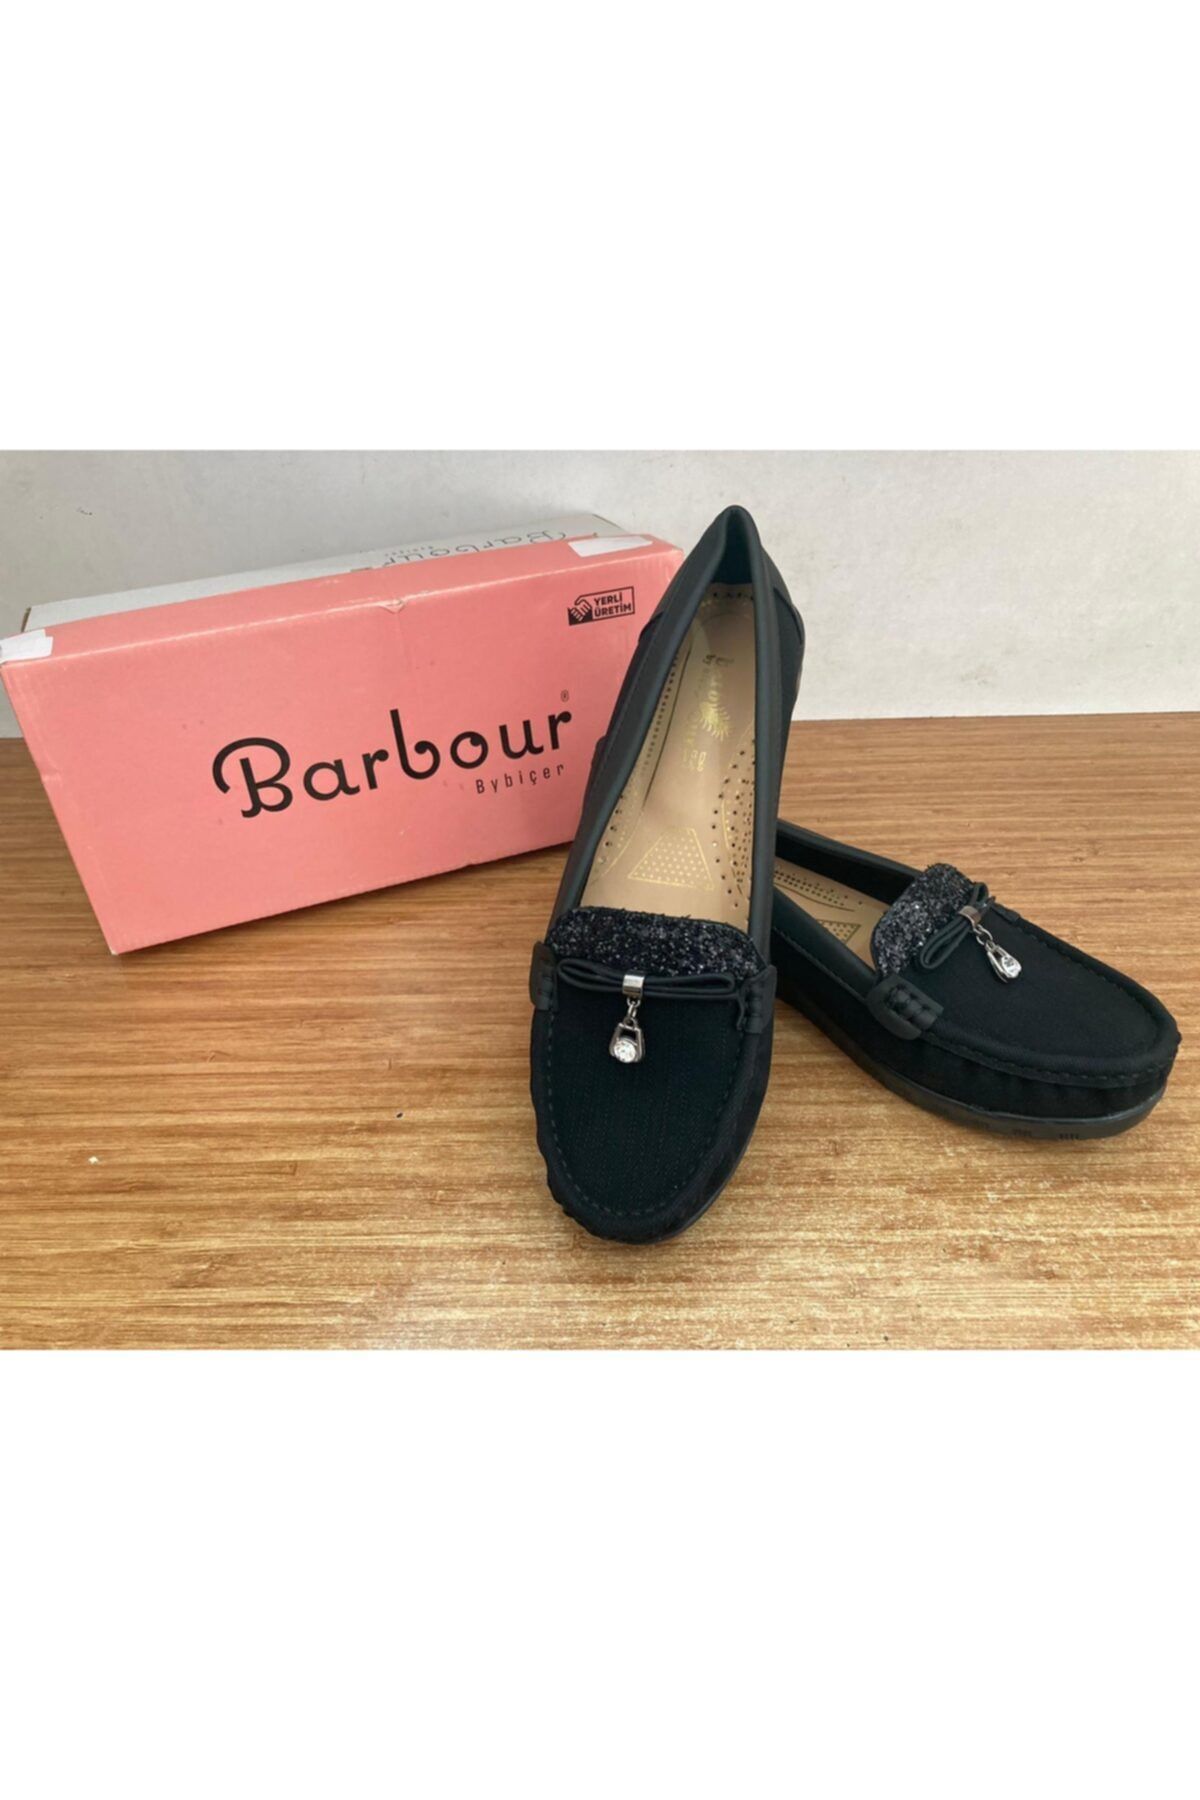 Barbour Babet Ayakkabı